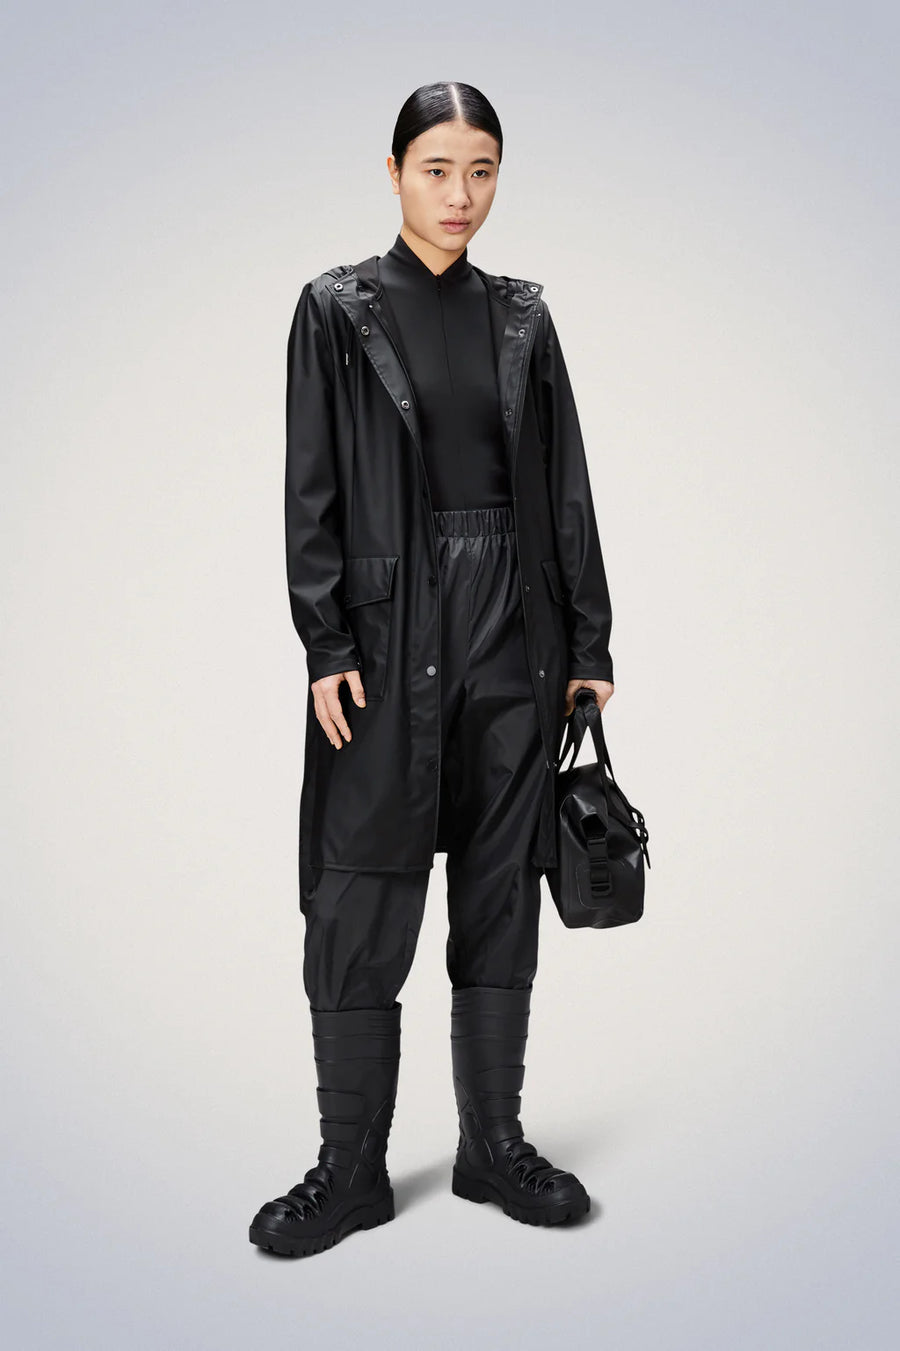 Rains Womens Curve Jacket in Black